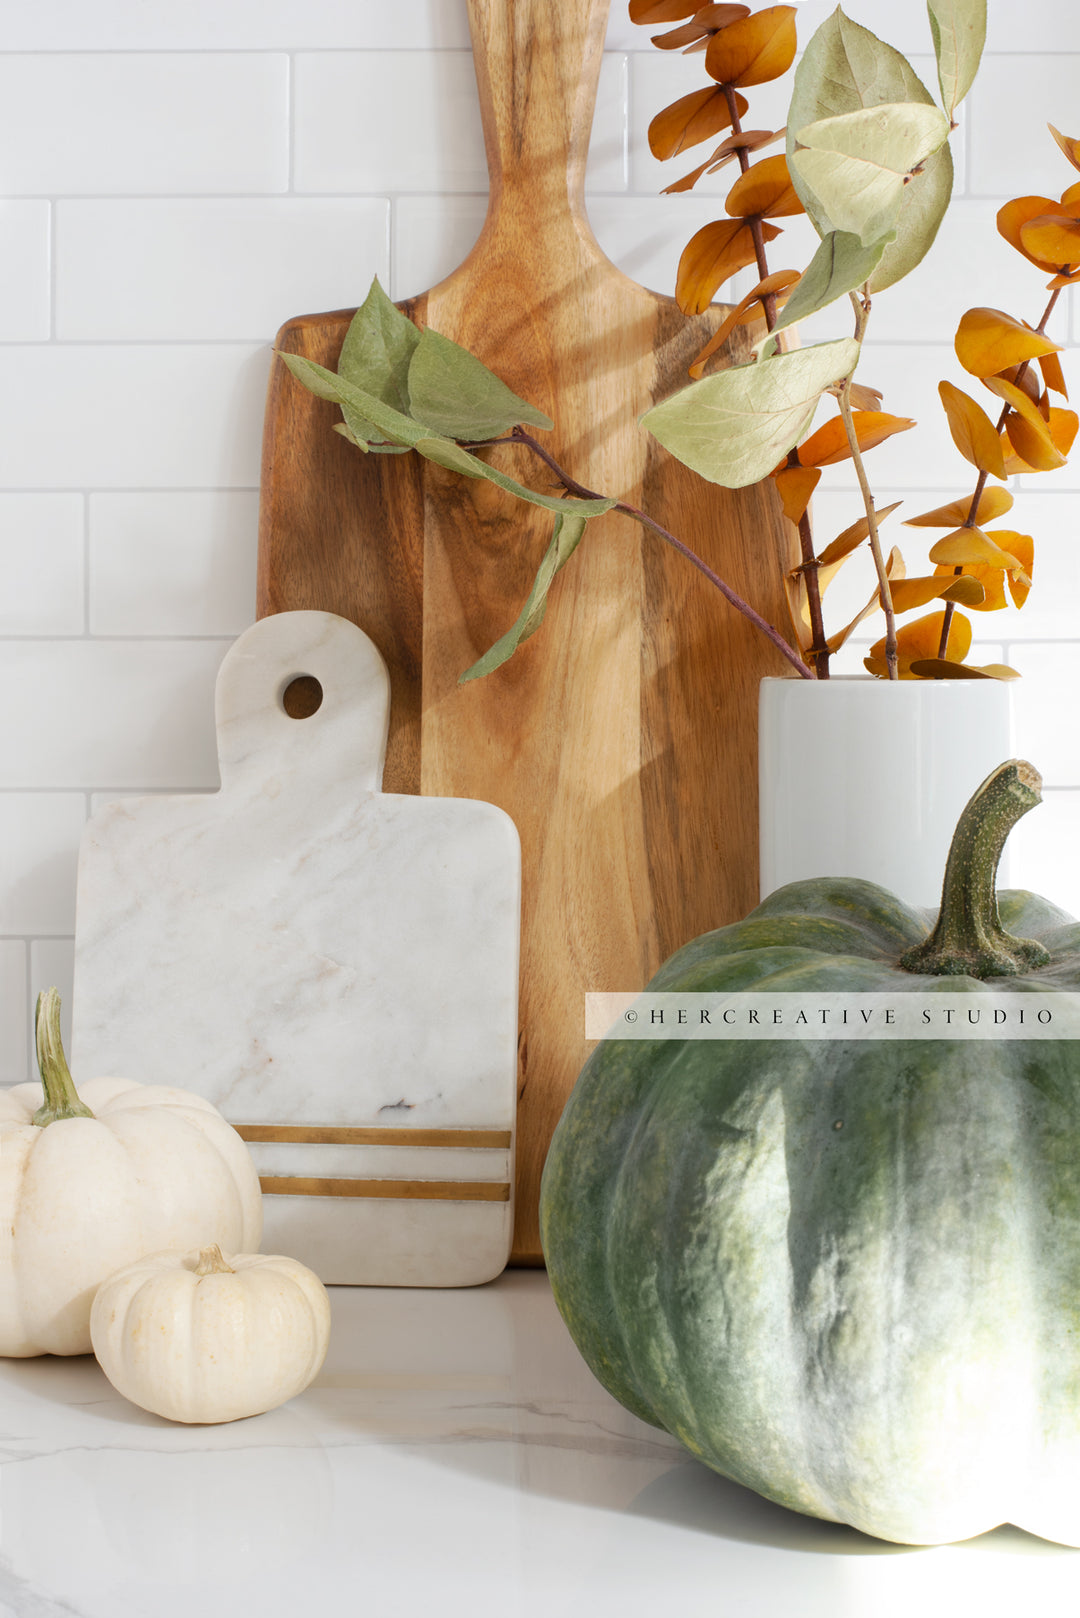 Fall Pumpkins & Cutting Boards in Kitchen. Digital Stock Image.